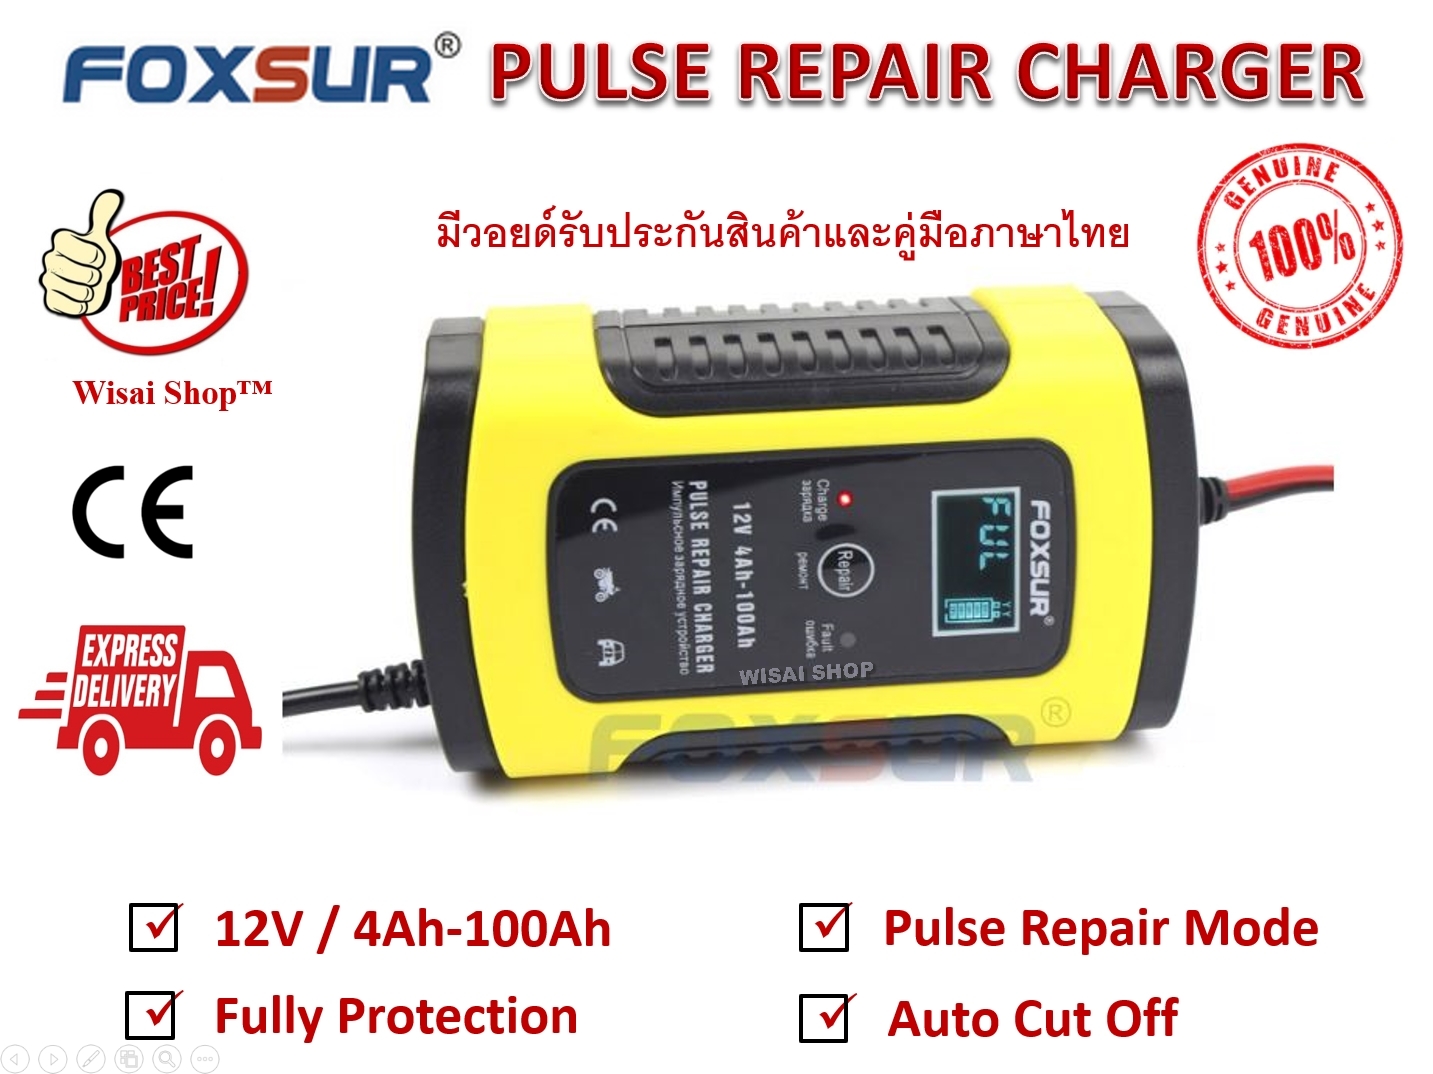 FOXSUR เครื่องชาร์จ 12V อัจฉริยะและซ่อมแบตเตอรี่รถยนต์ Pulse Repair Charger 12V 4-100Ah รุ่น FBC1205D พร้อมคู่มือภาษาไทยและมีการรับประกันคุณภาพ